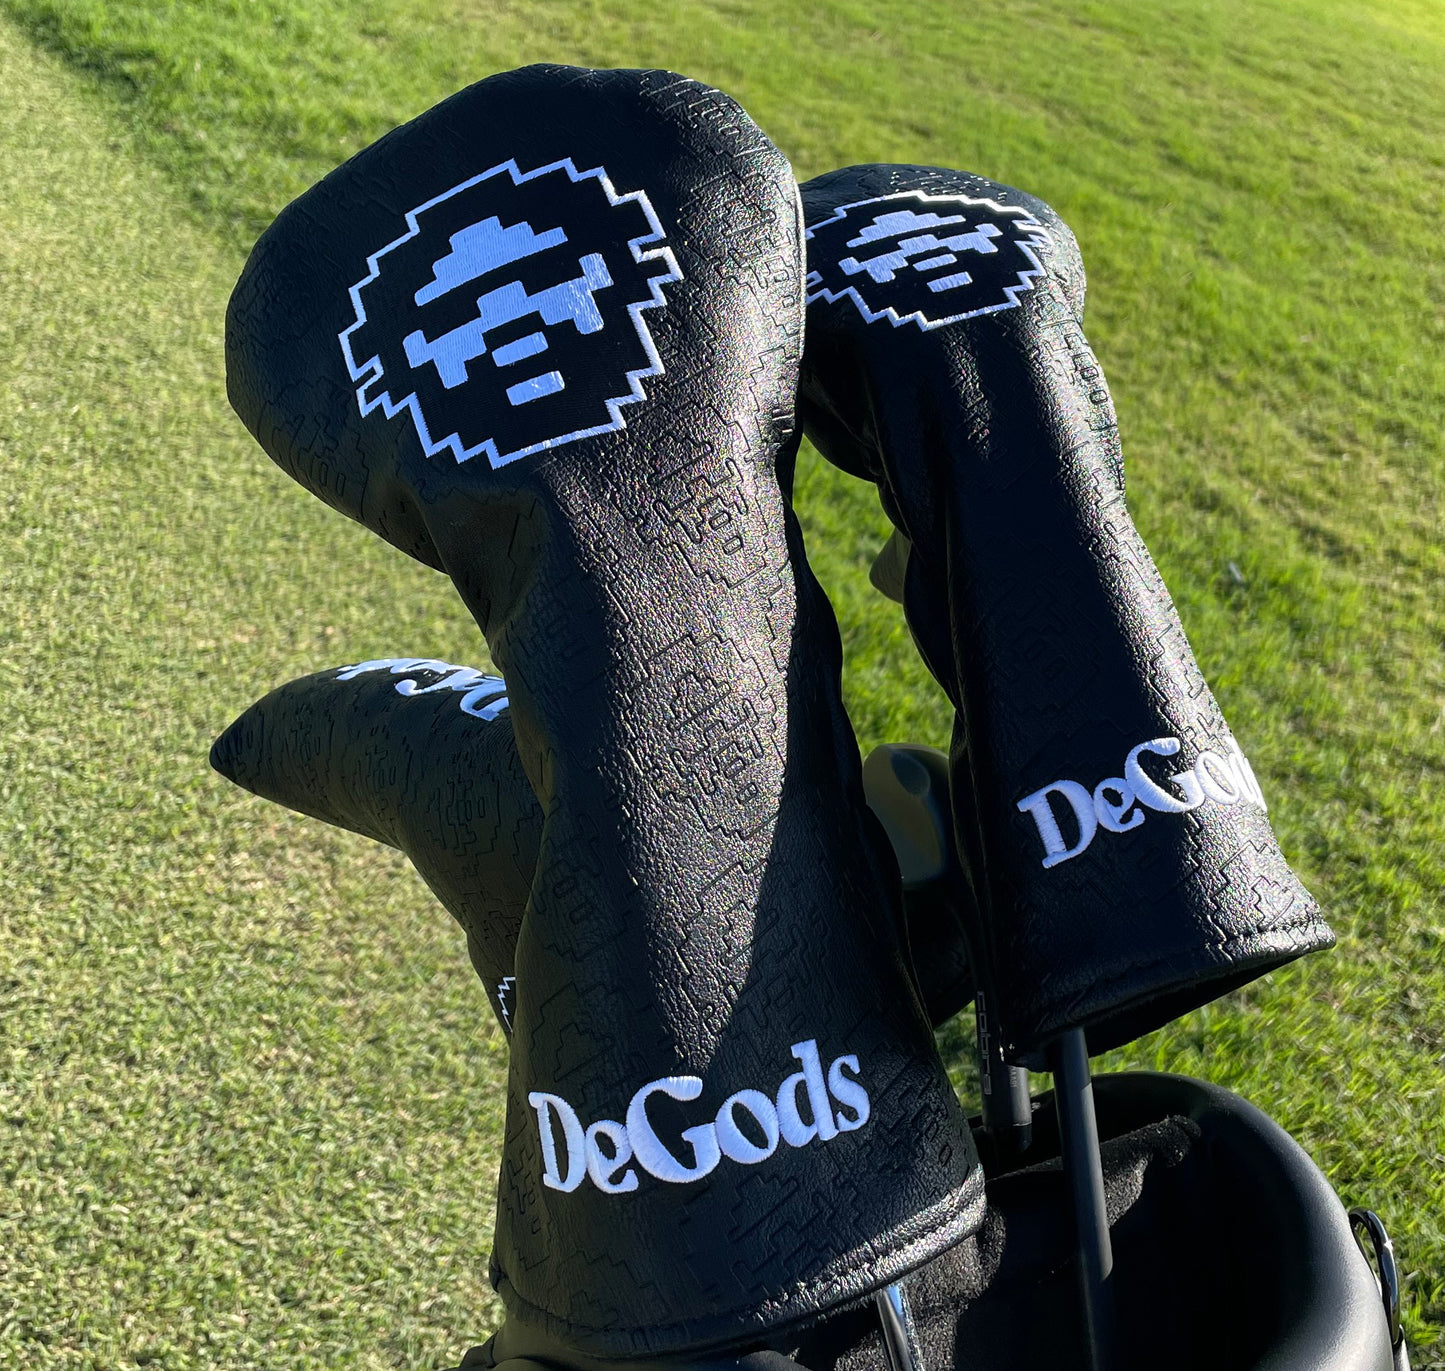 DeGods Golf Headcovers